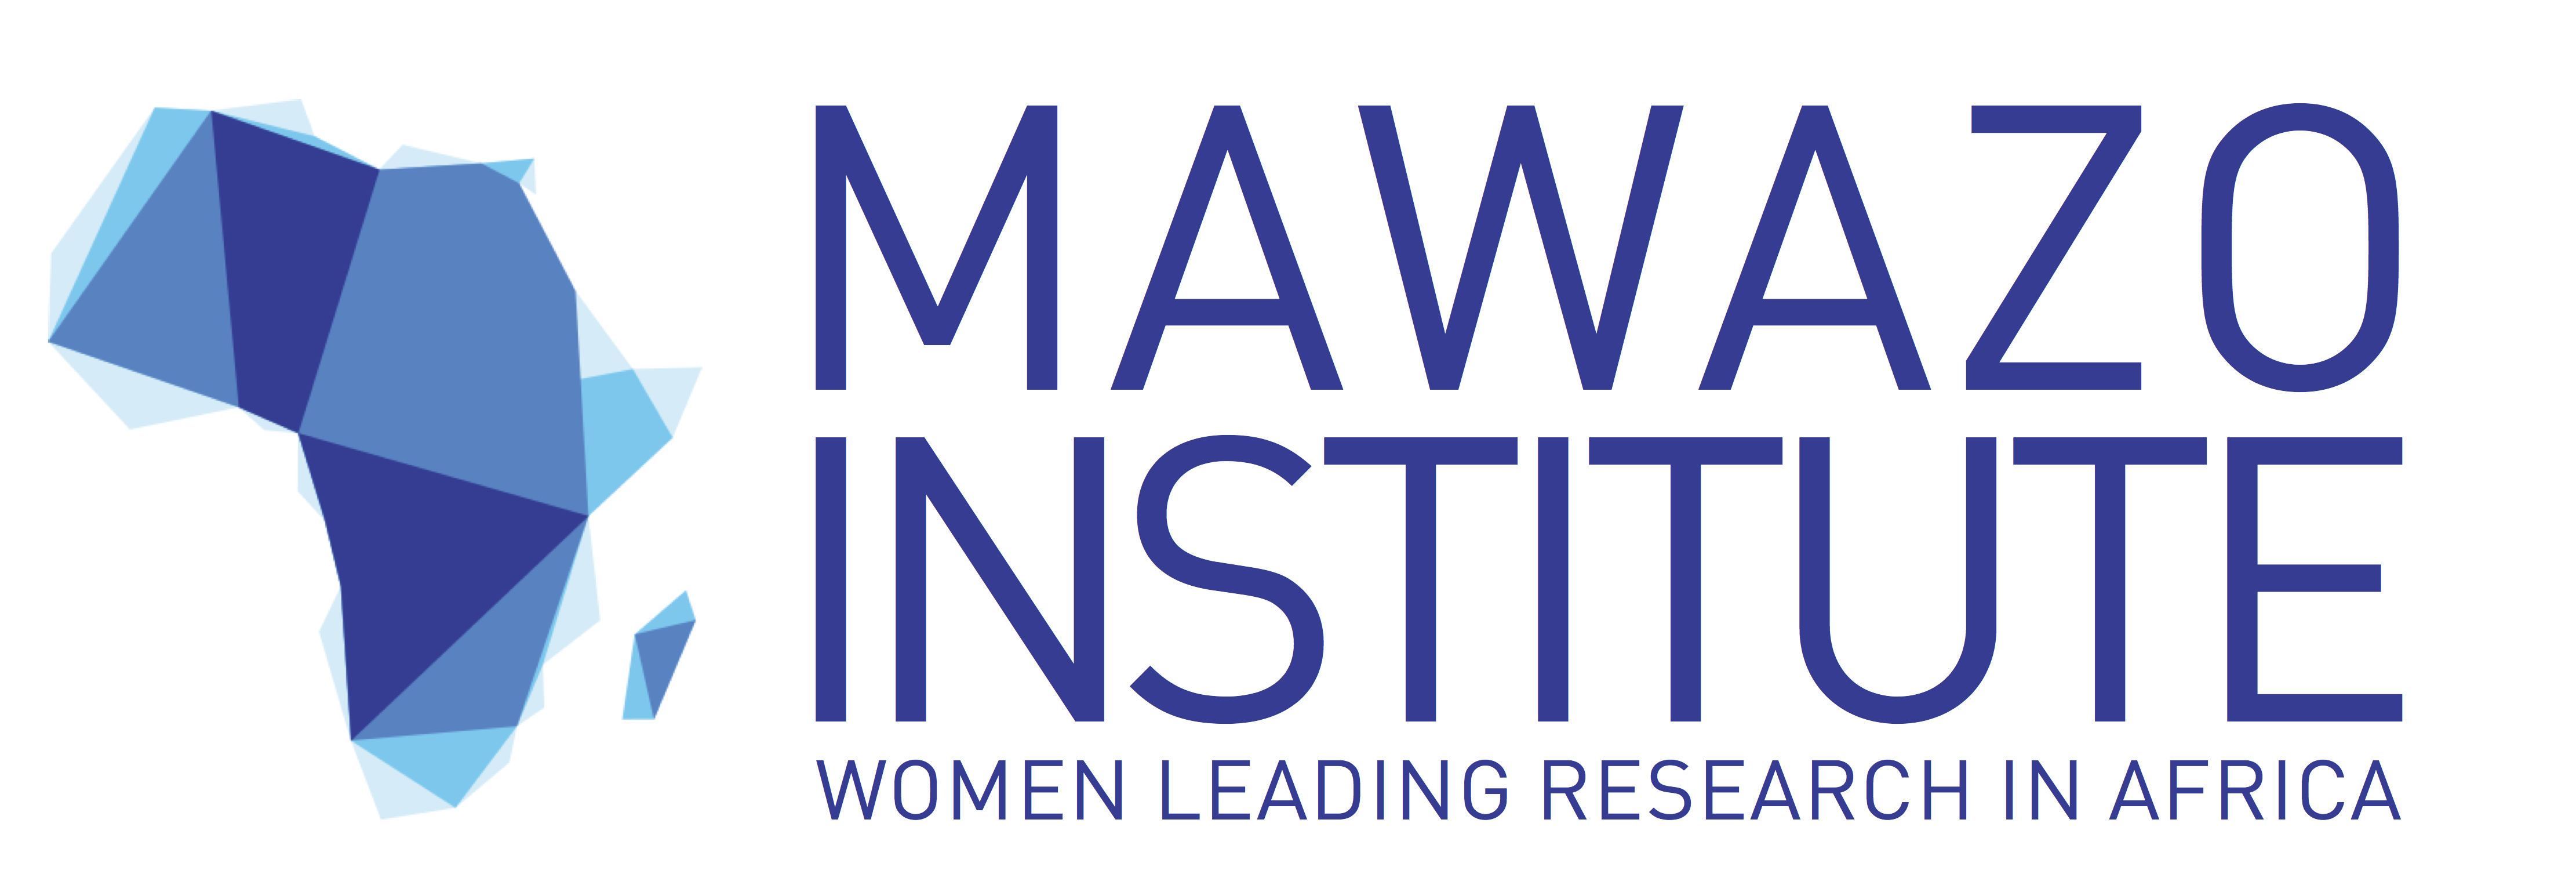 Mawazo Fellowship logo